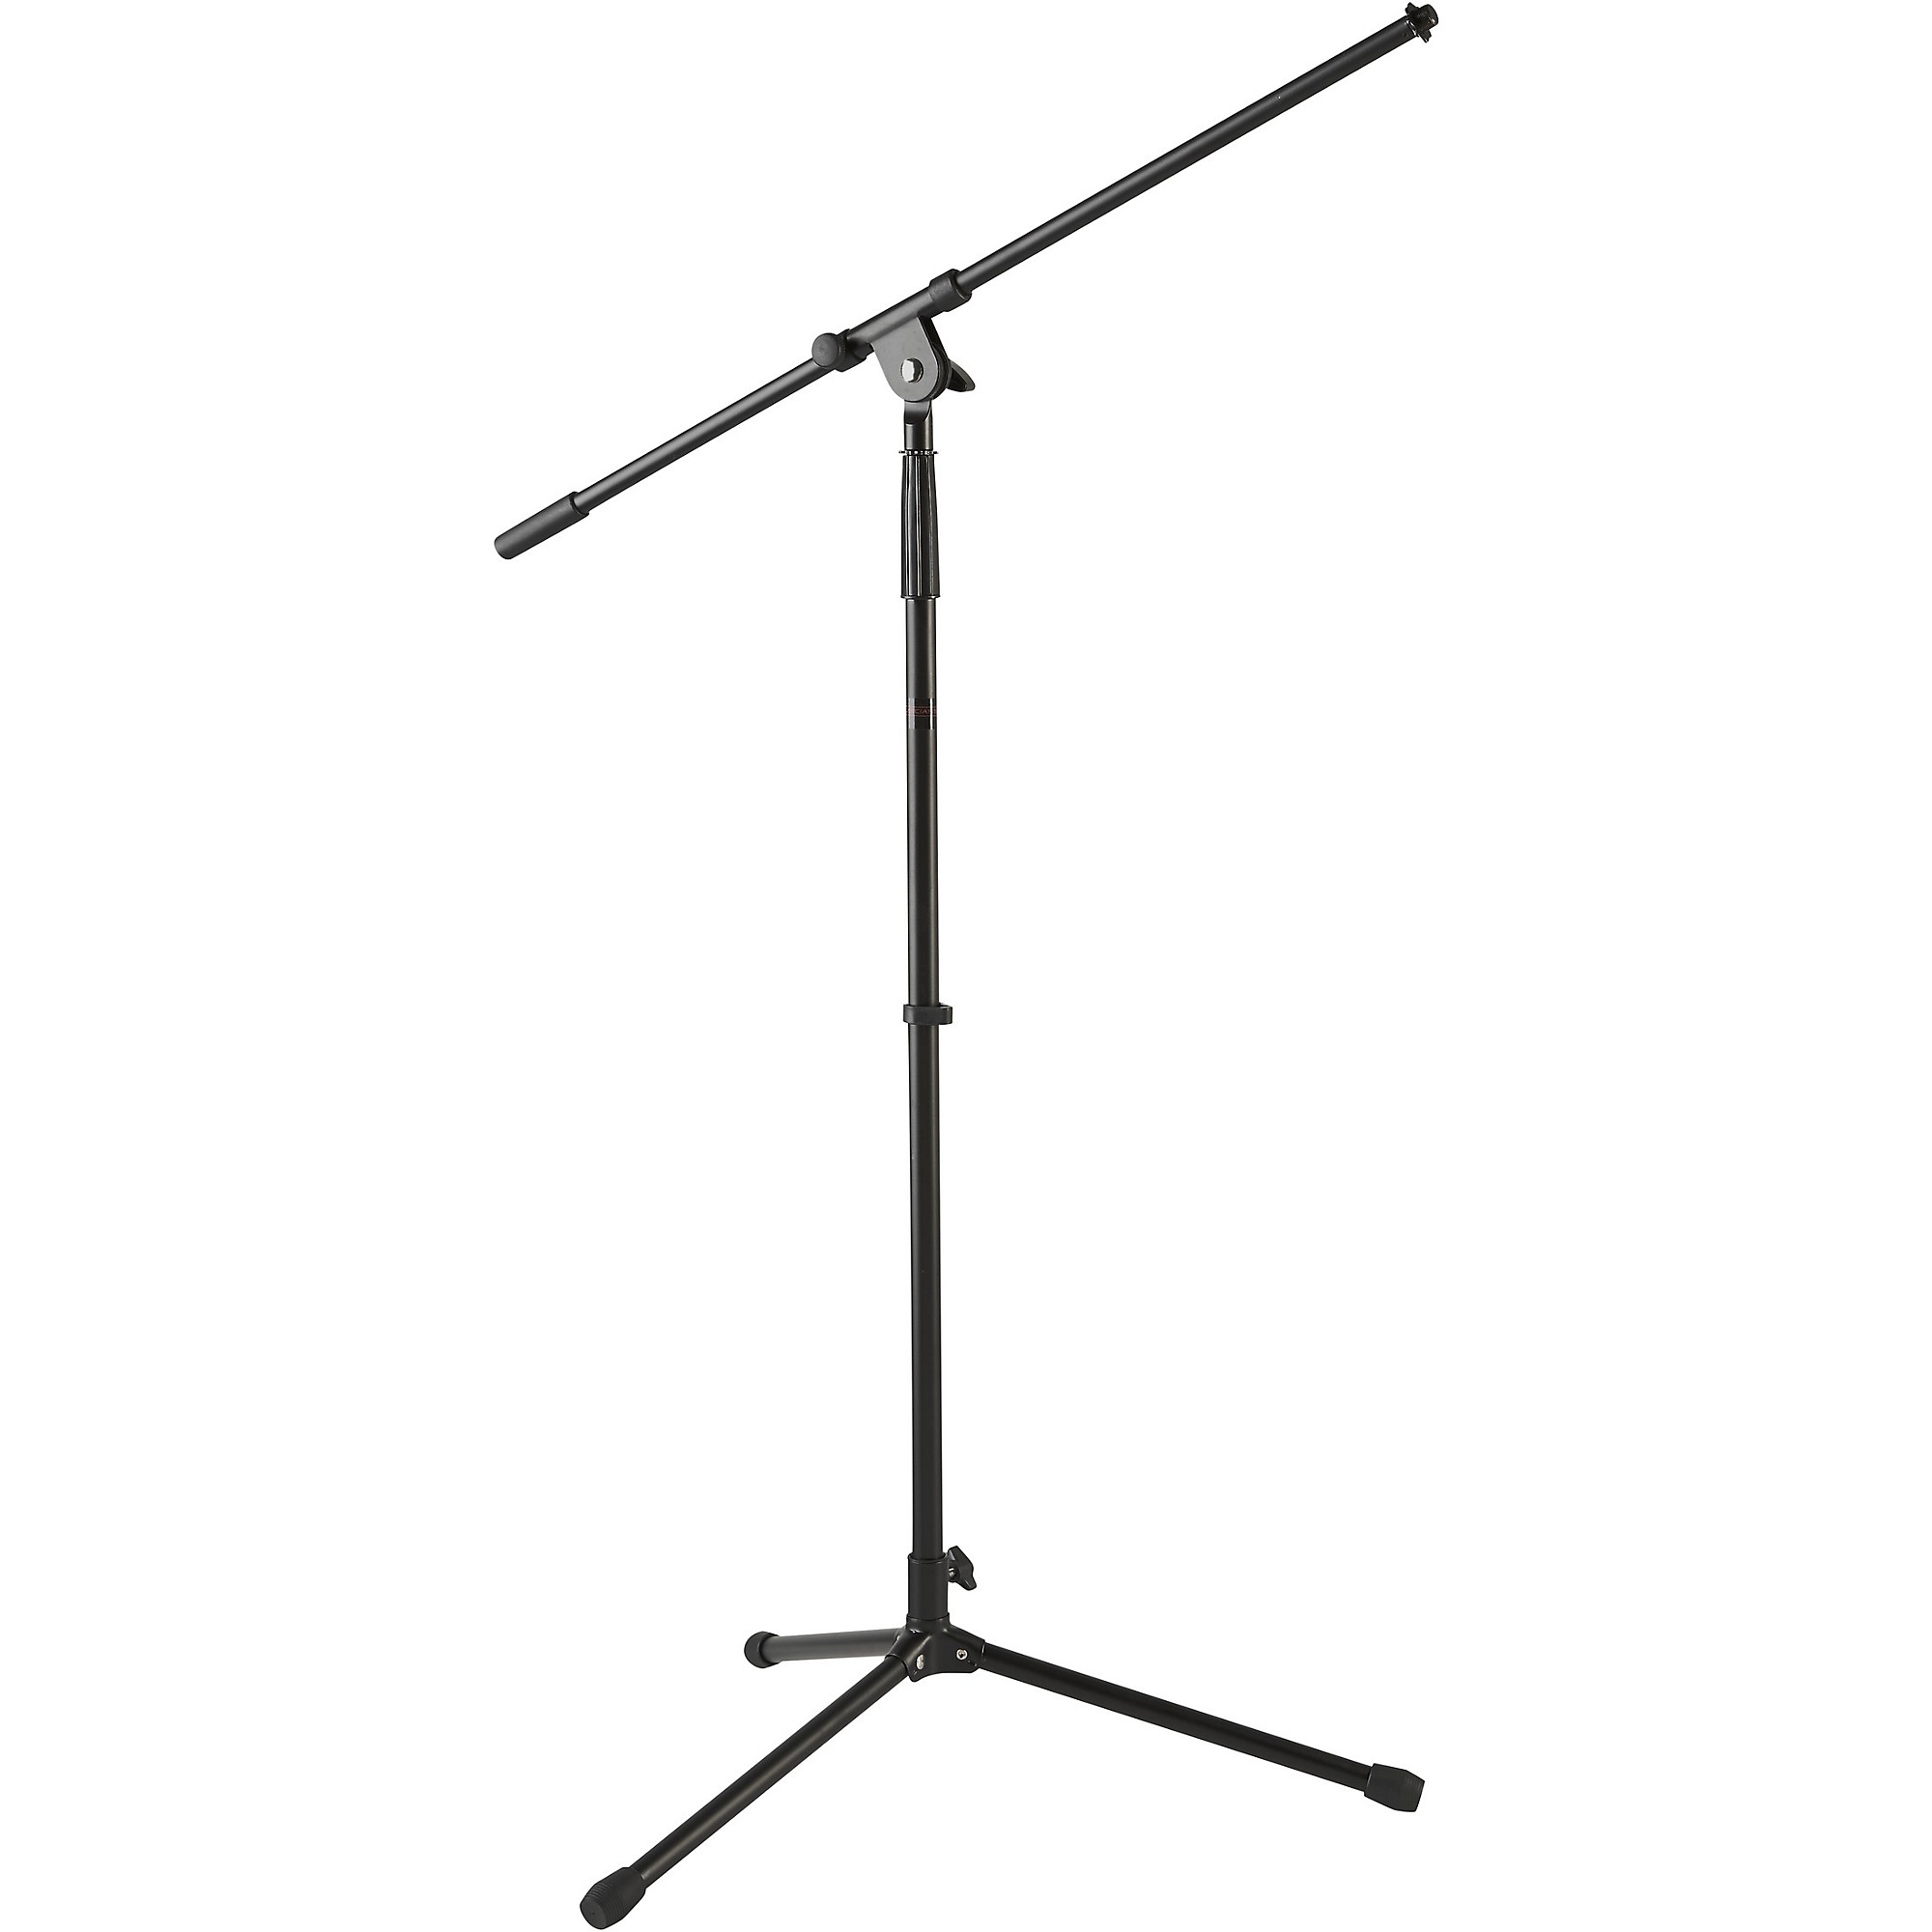 Shure PGA58 Vocal Microphone Set Including Tripod Boom Stand & XLR